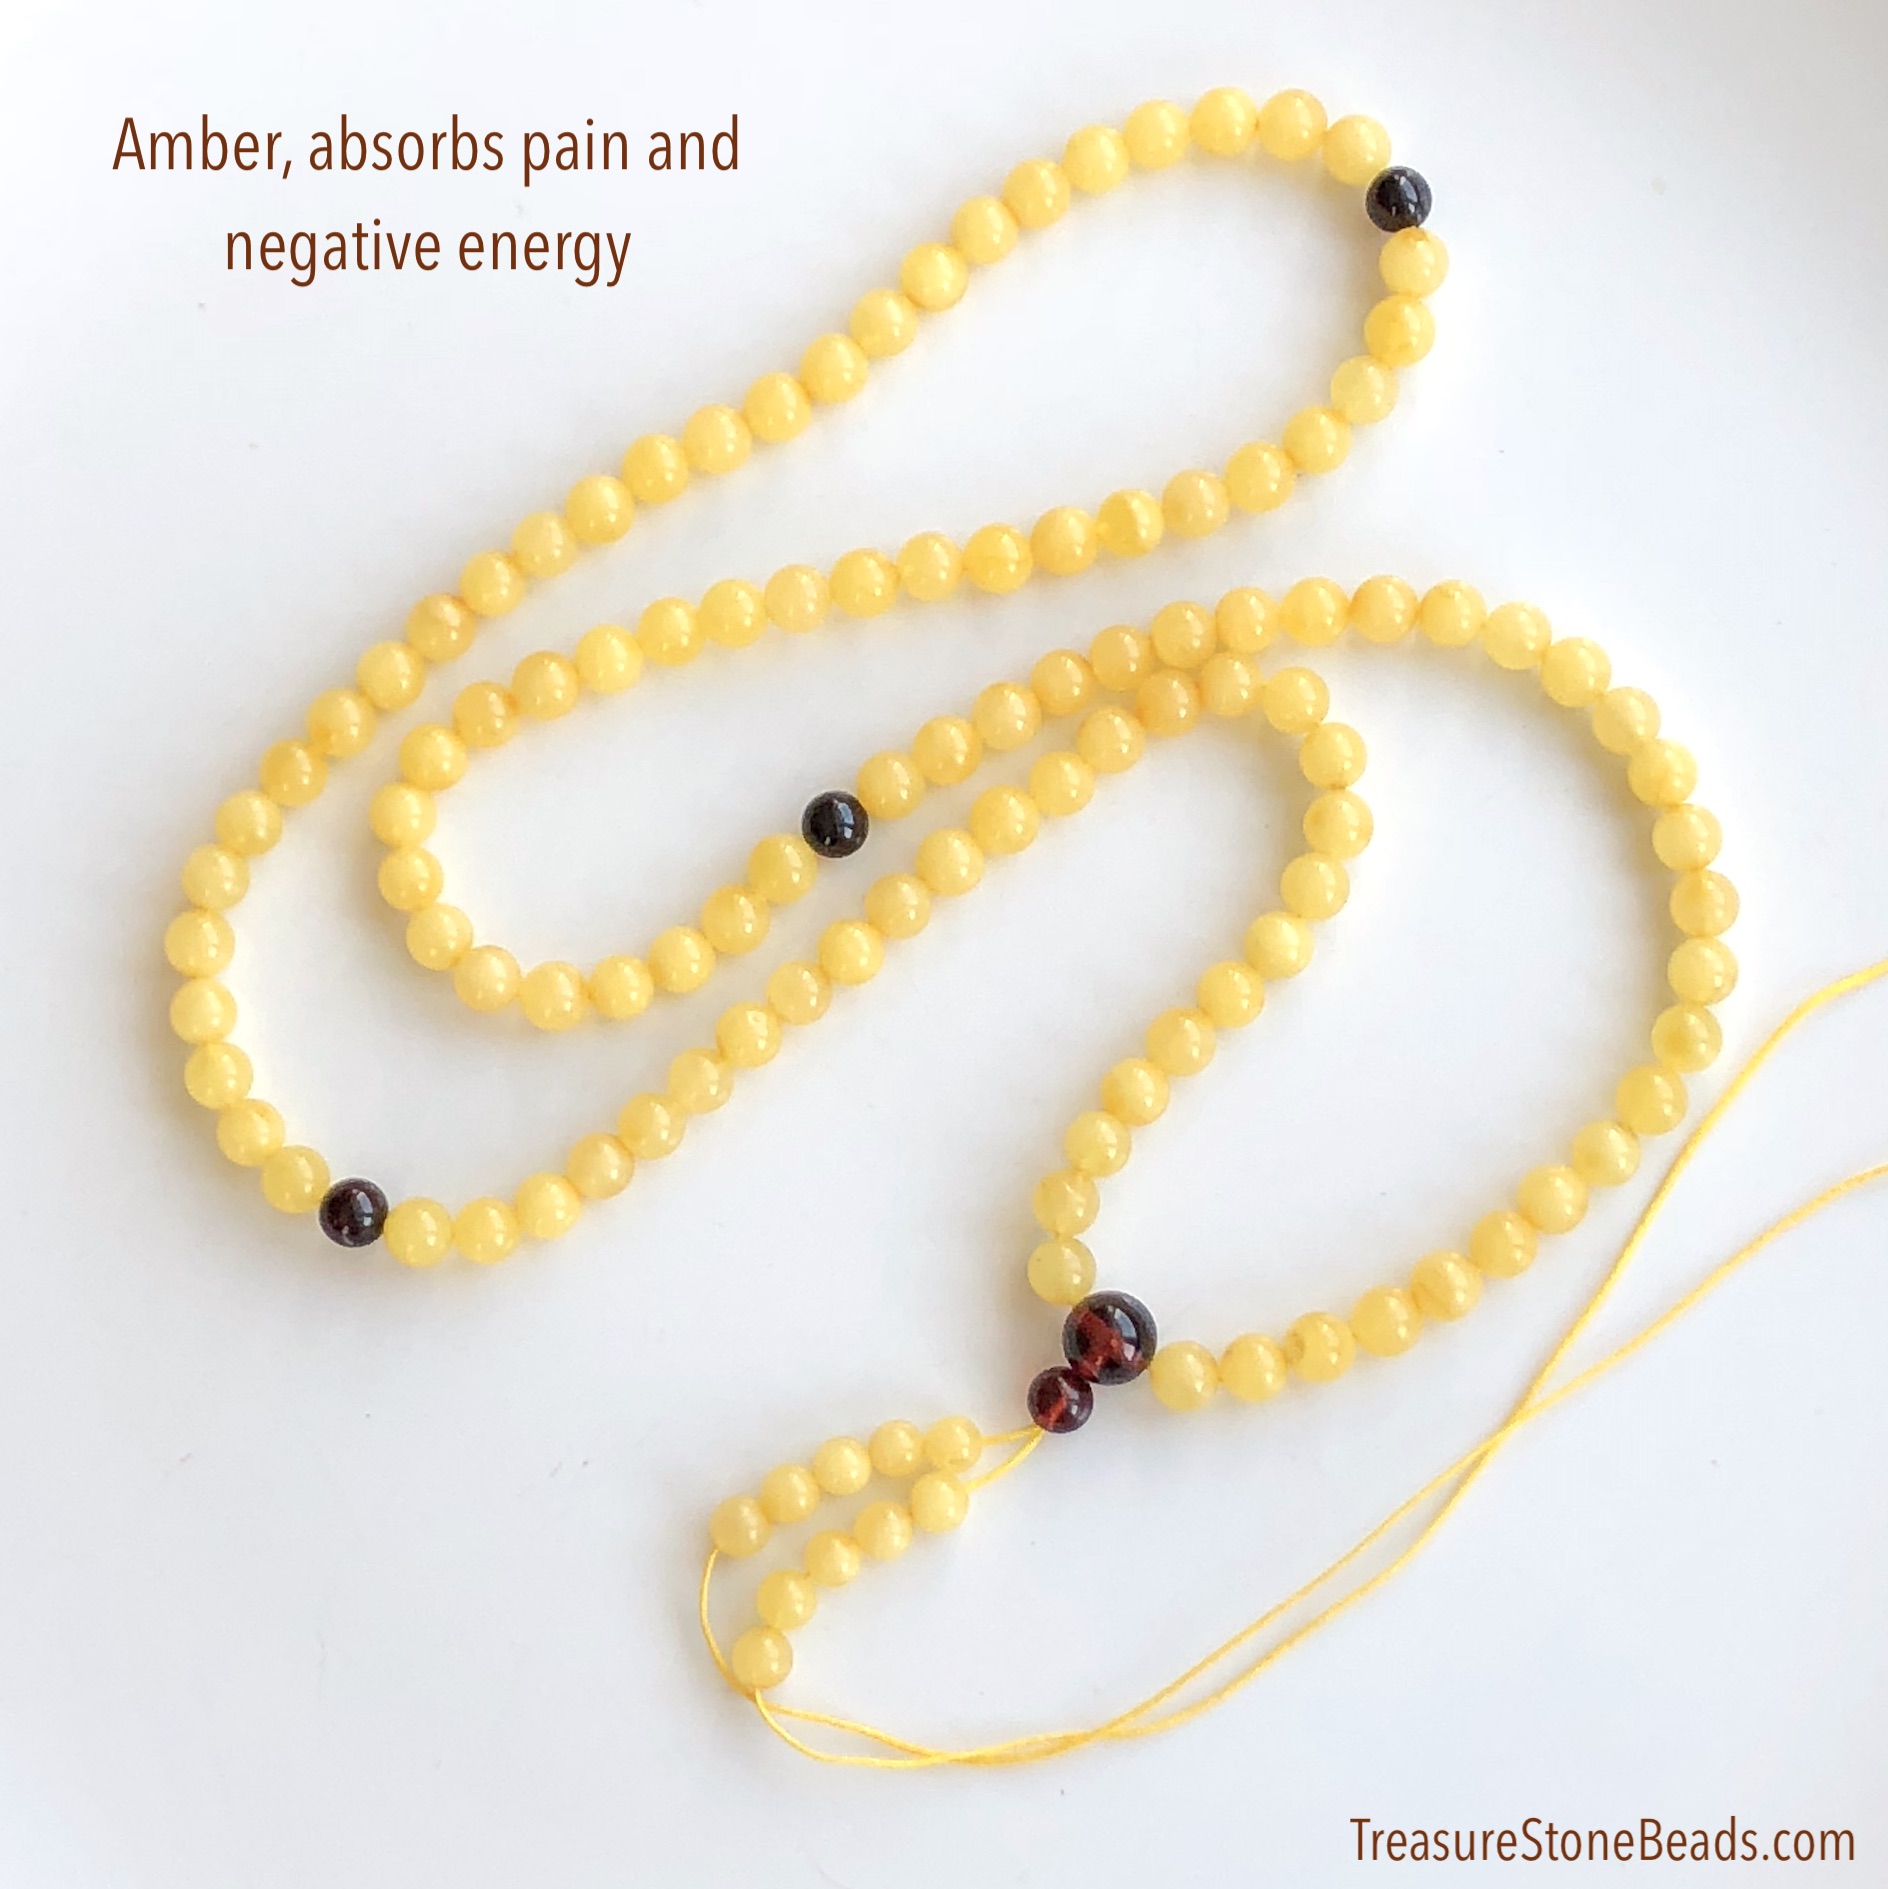 Bead, Mala necklace, Amber, 6mm round. 108 beads with guru